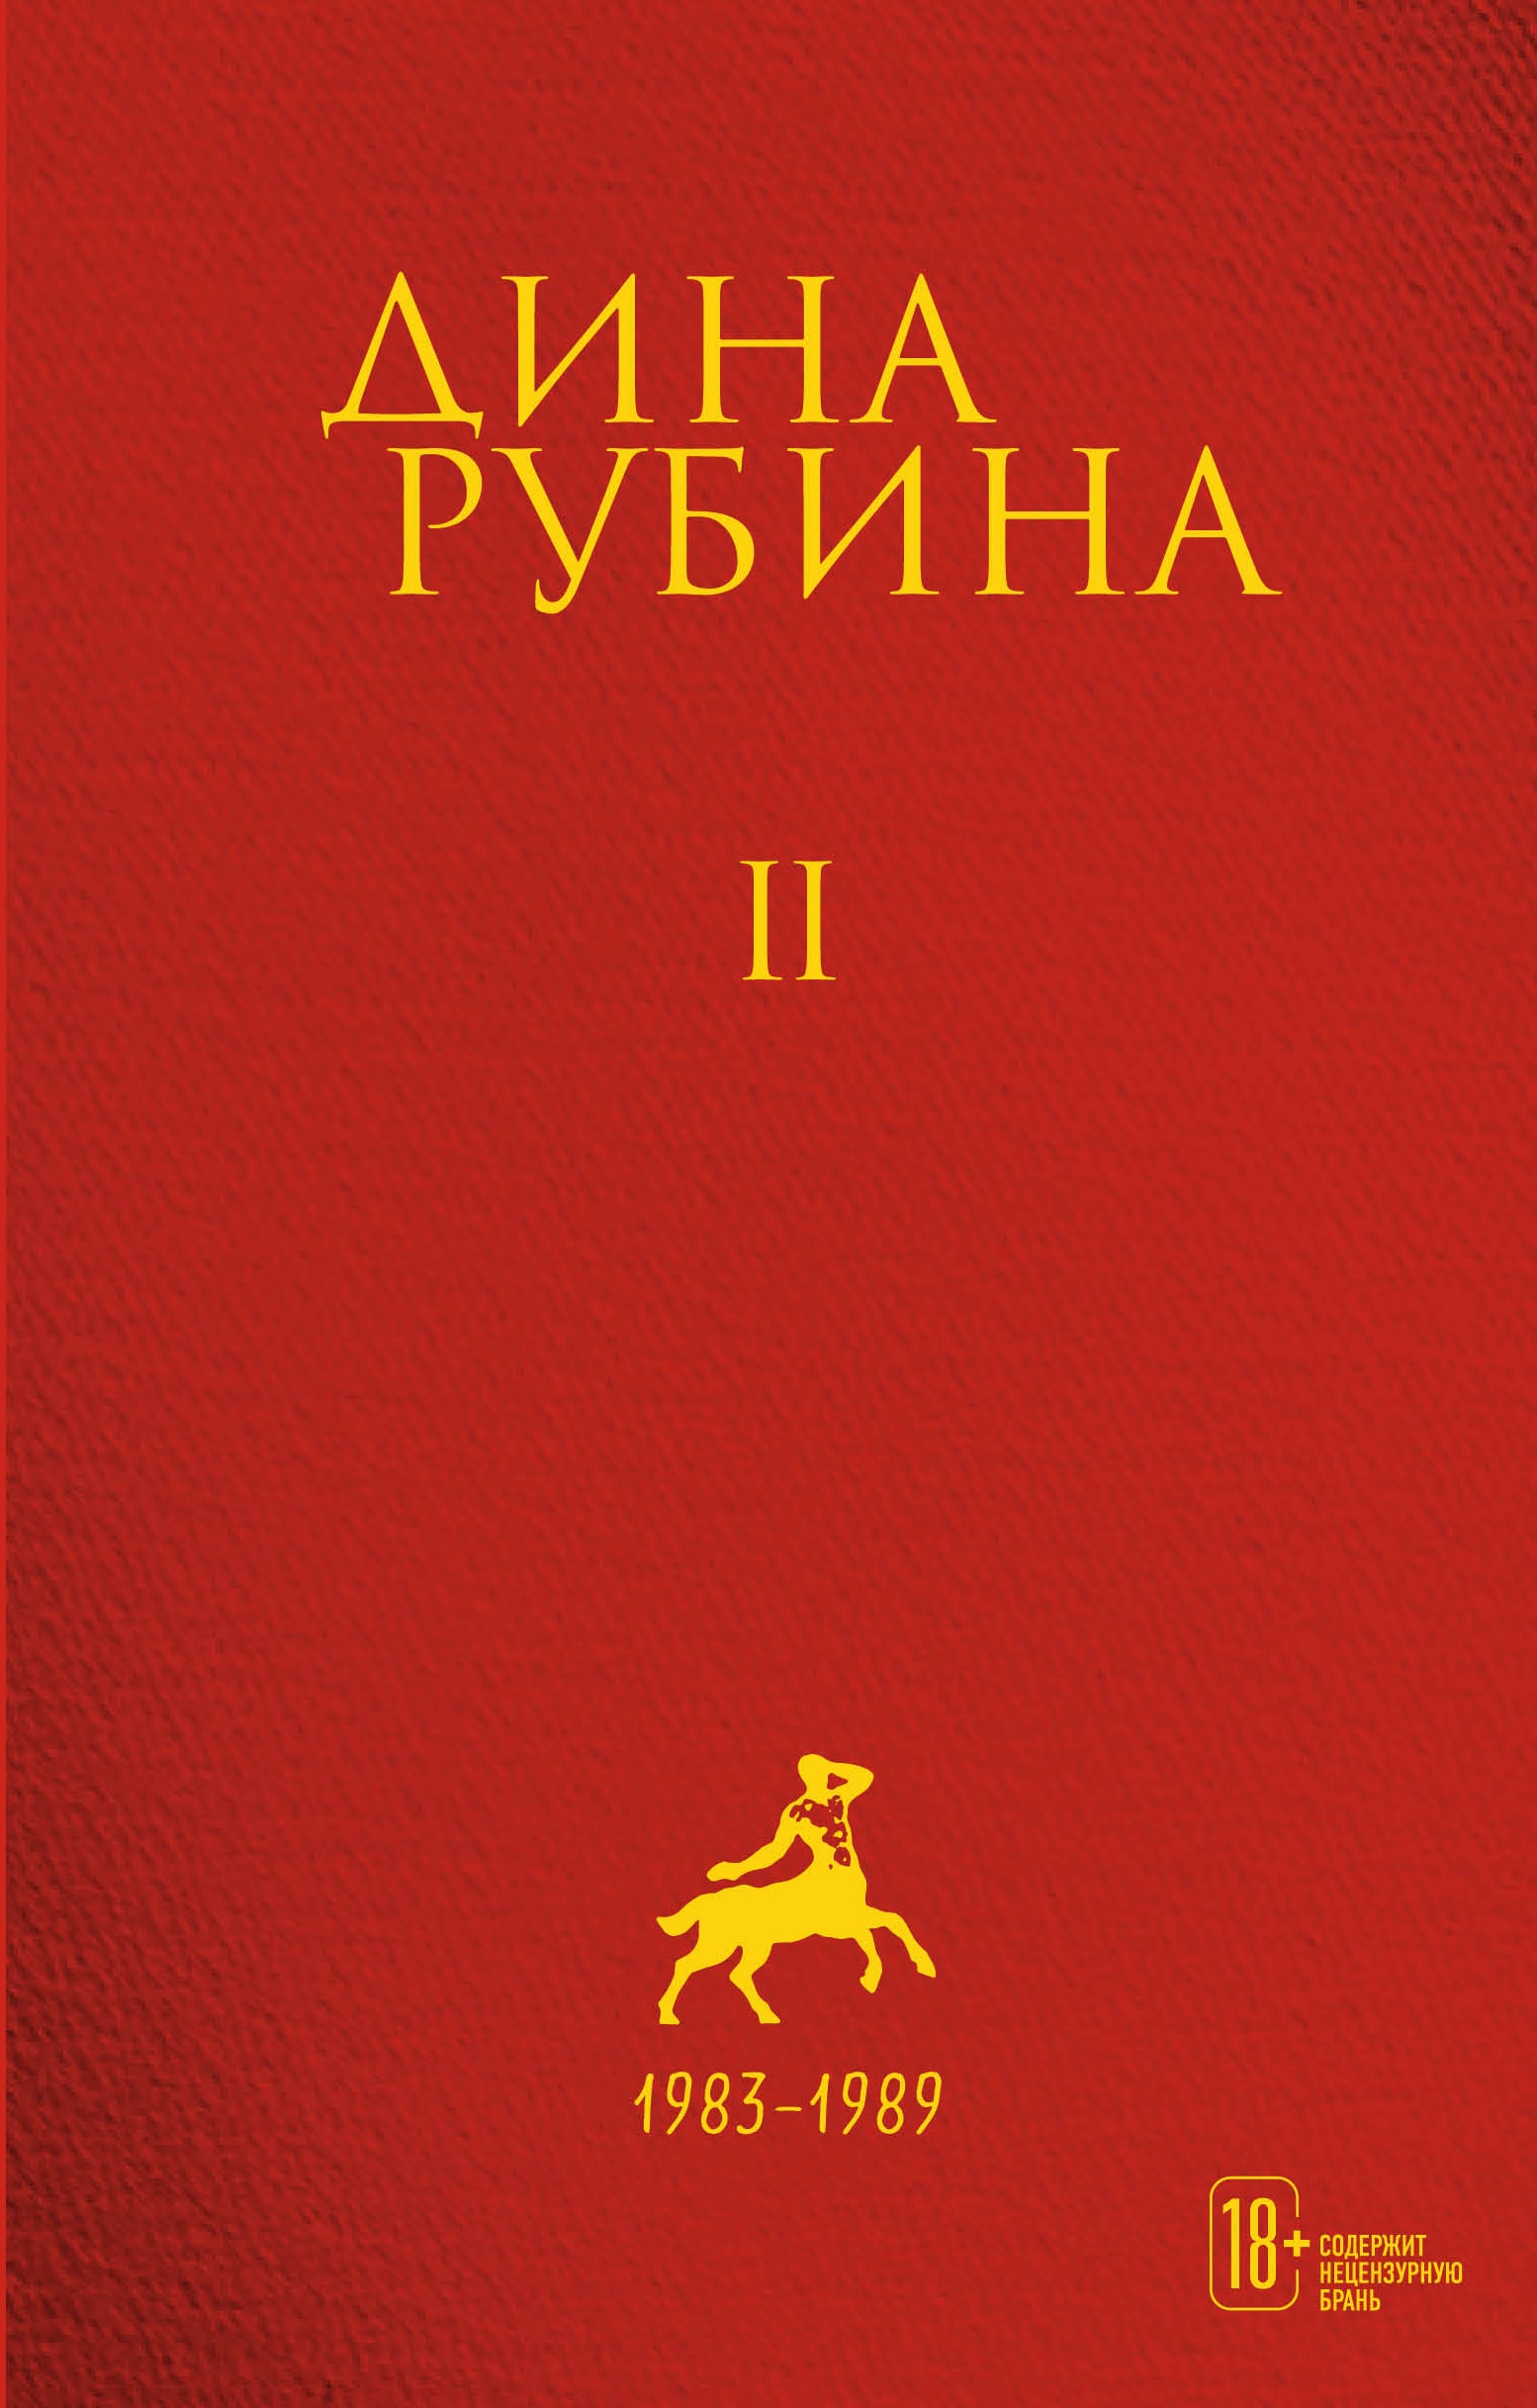 Book “Том 2” by Дина Рубина — July 7, 2021